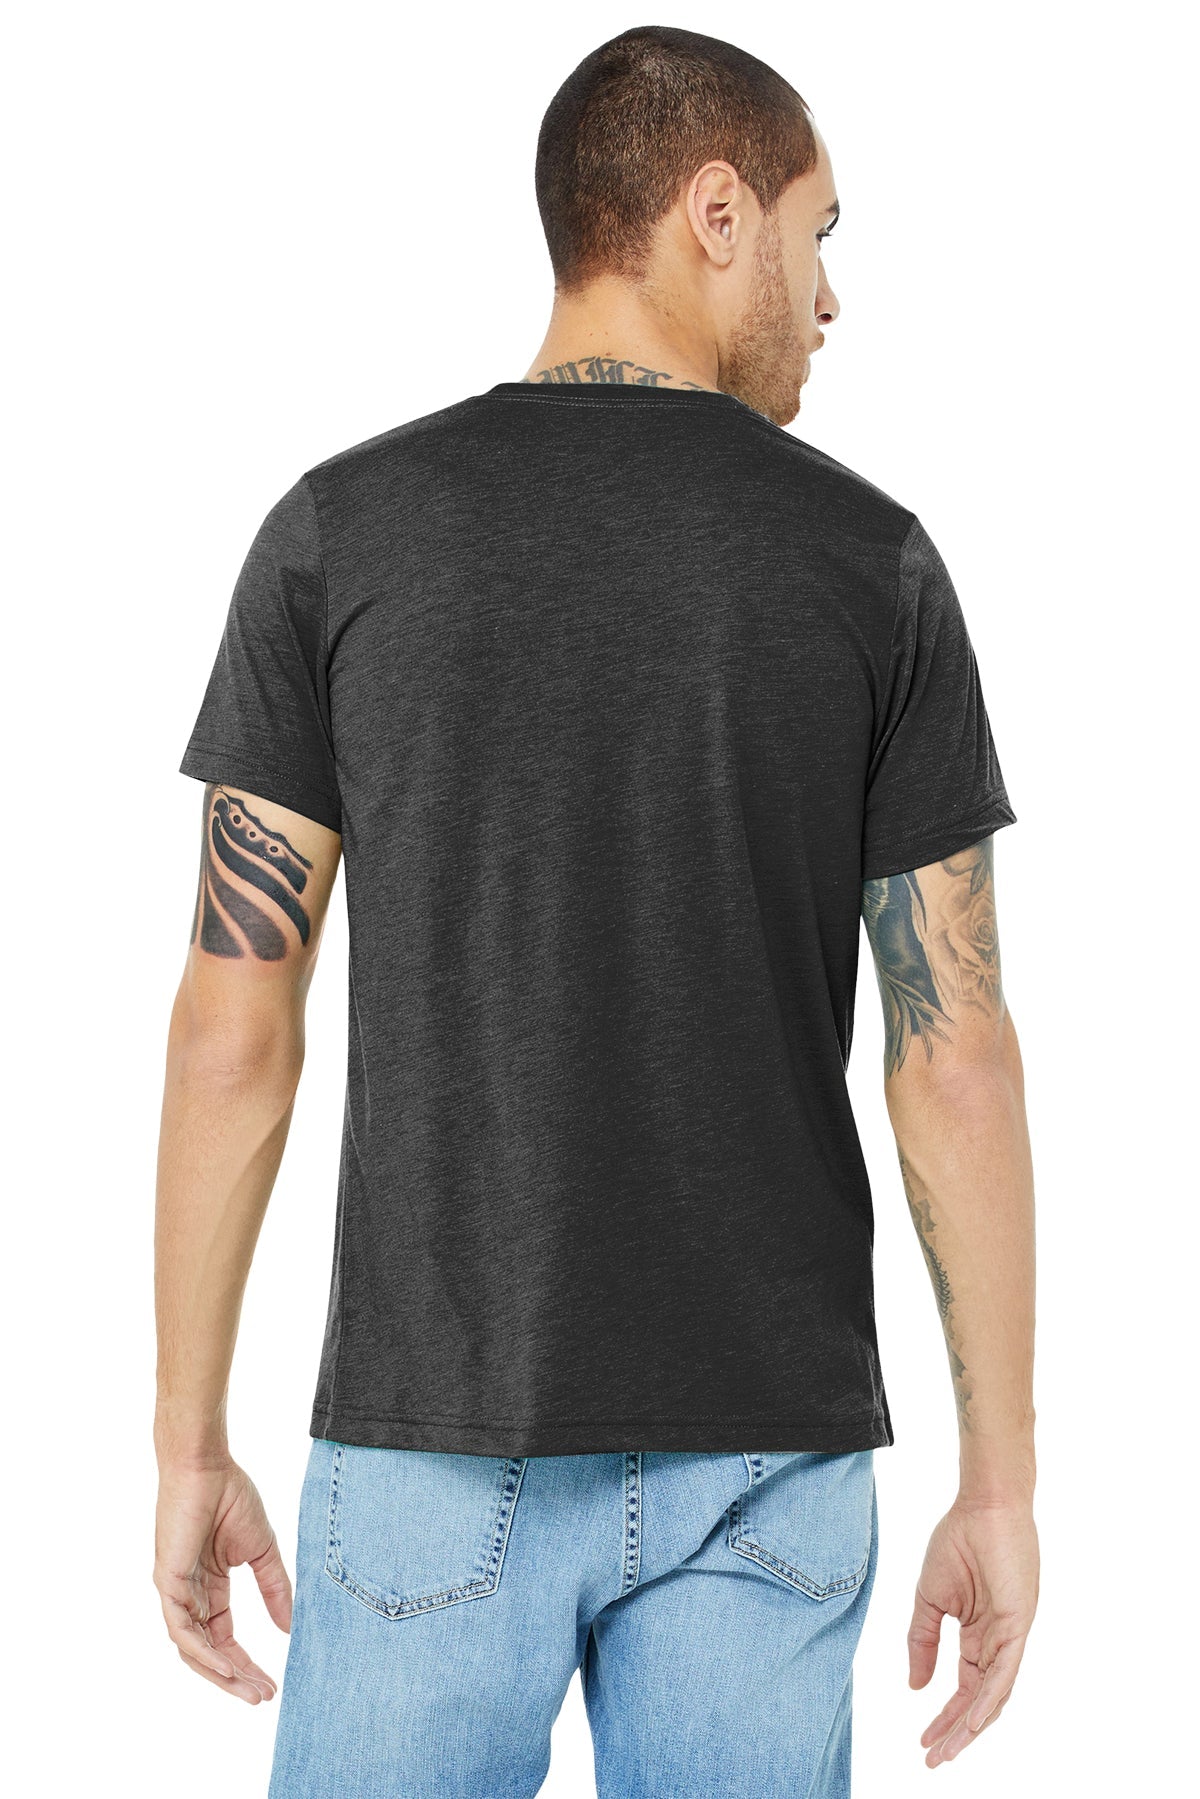 bella + canvas unisex triblend short sleeve t-shirt 3413c char-black trib